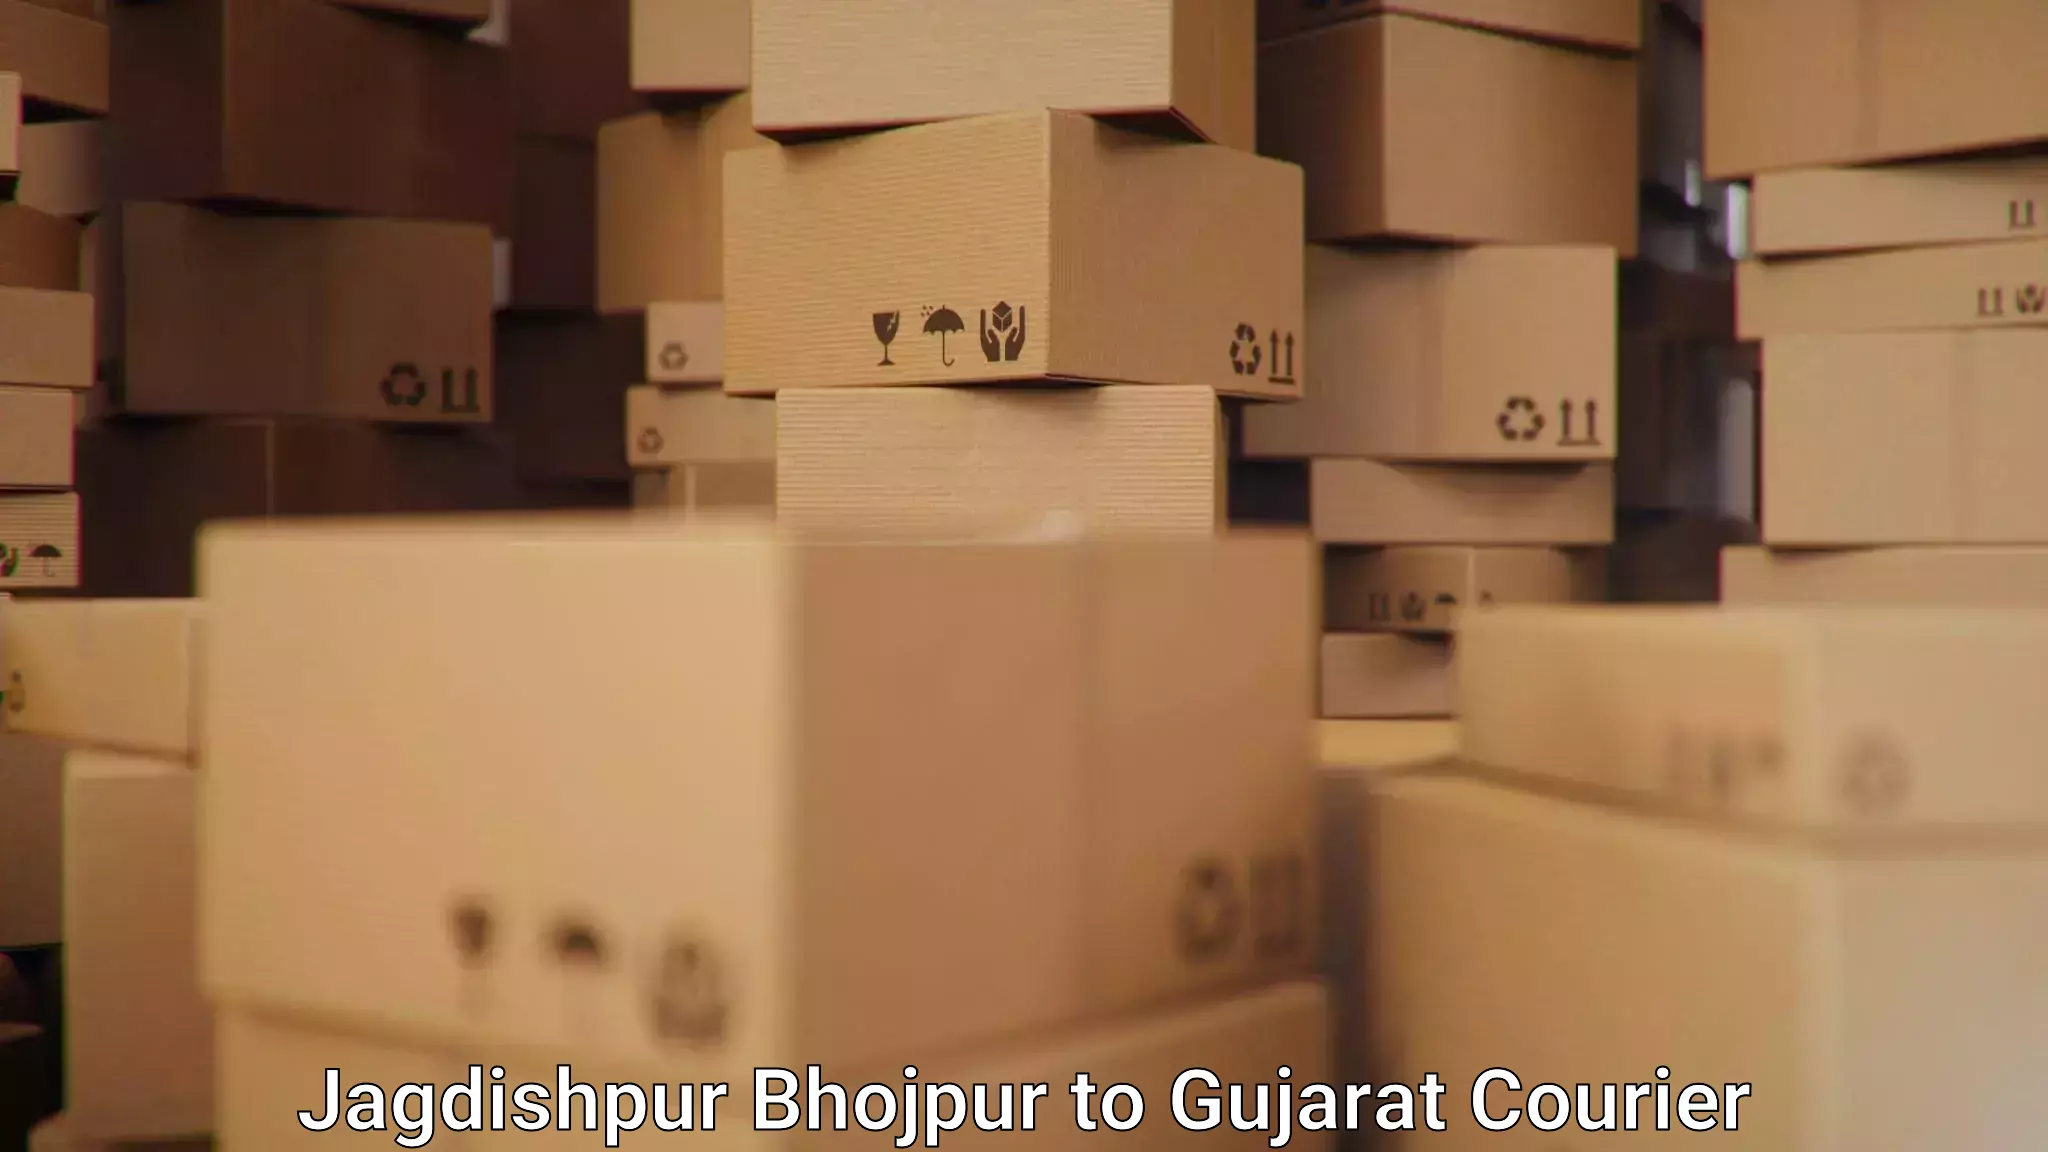 Efficient order fulfillment Jagdishpur Bhojpur to Matar